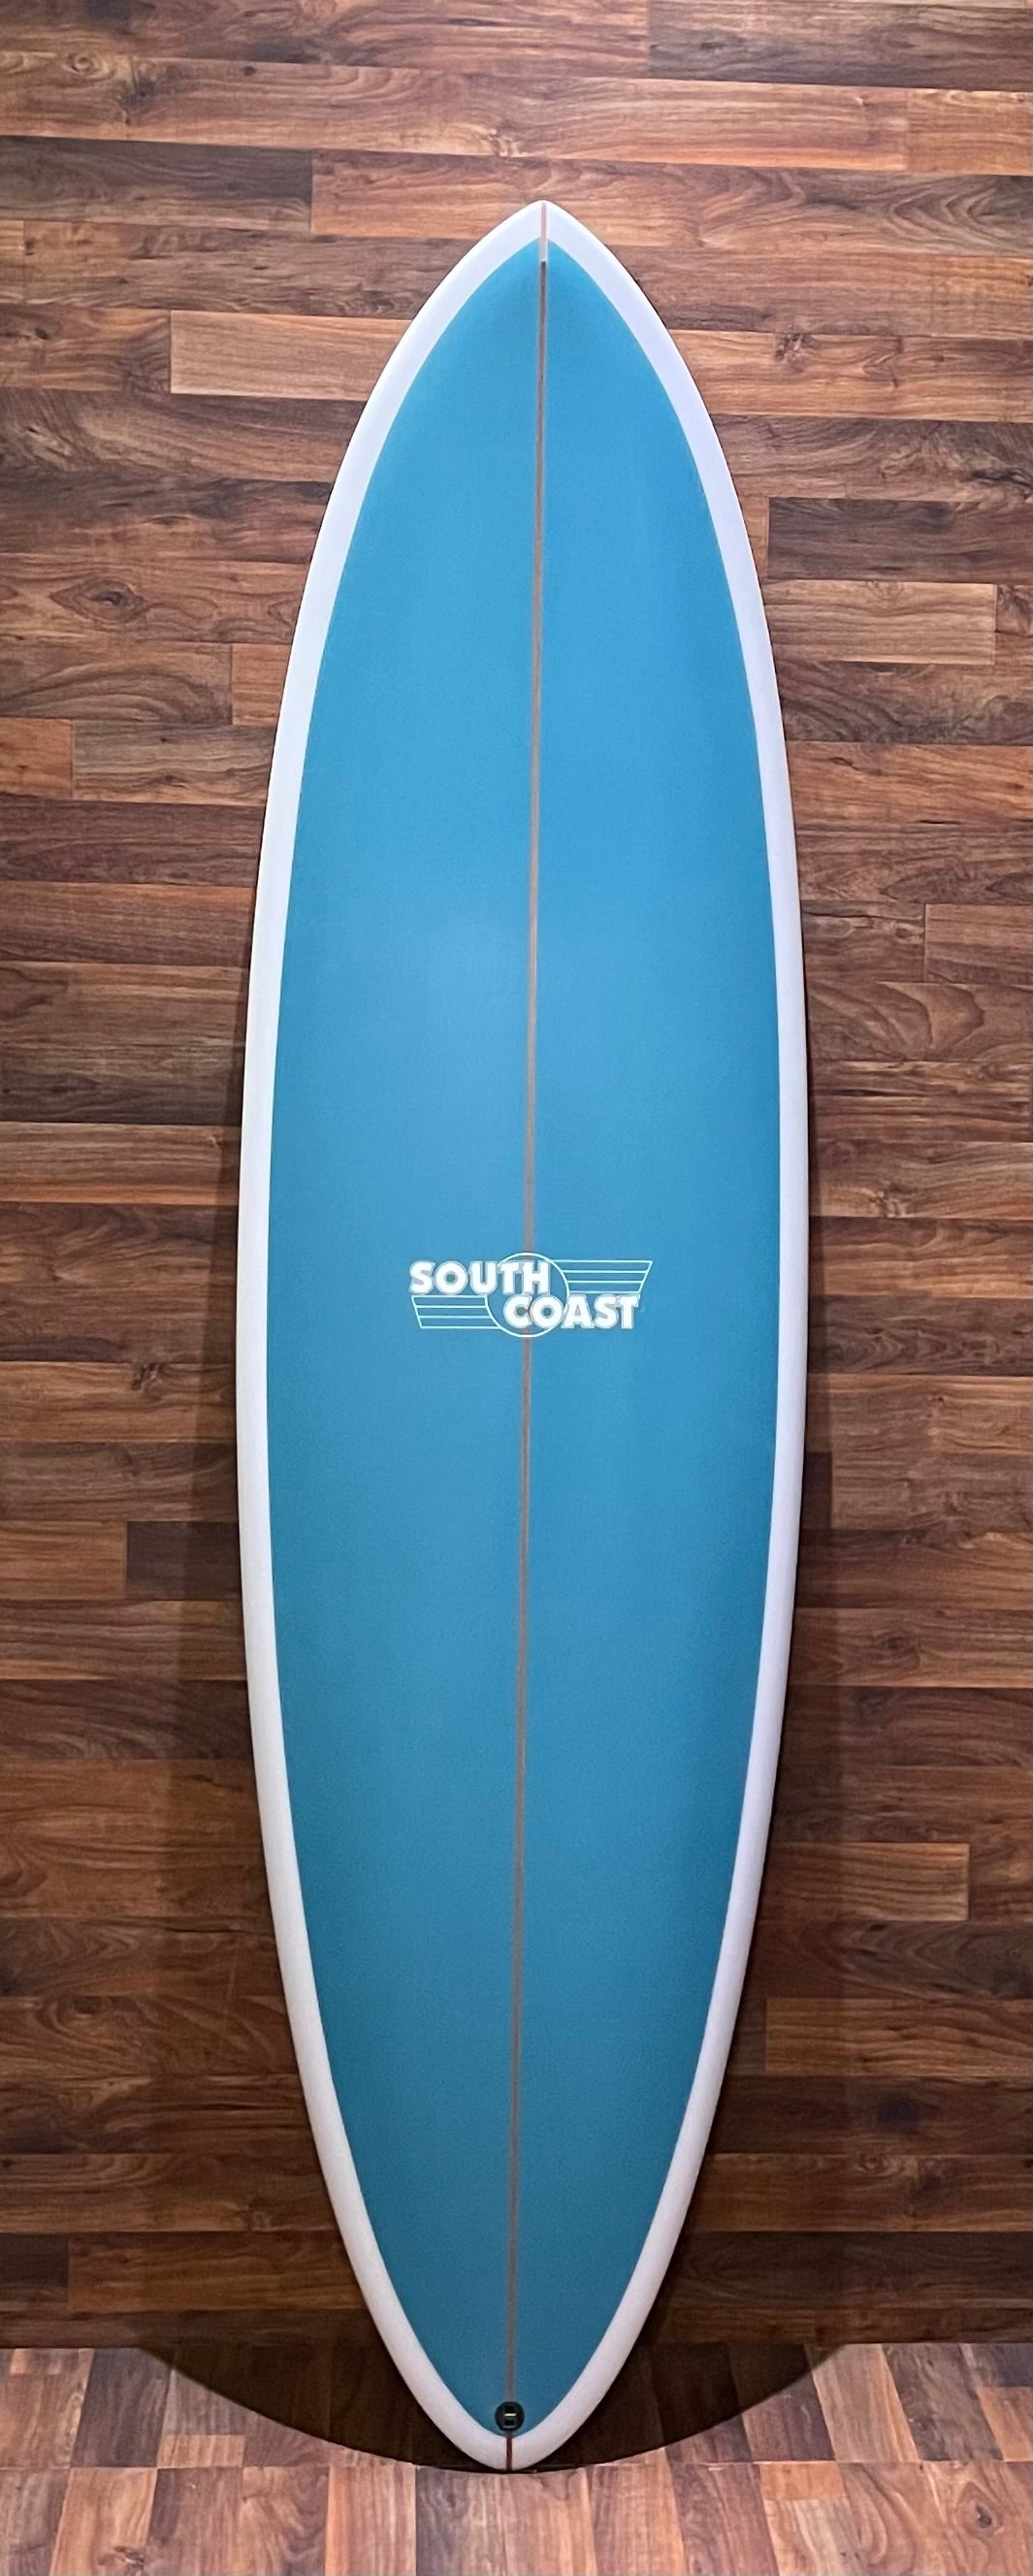 South Coast Bachelor Surfboard 6'10"